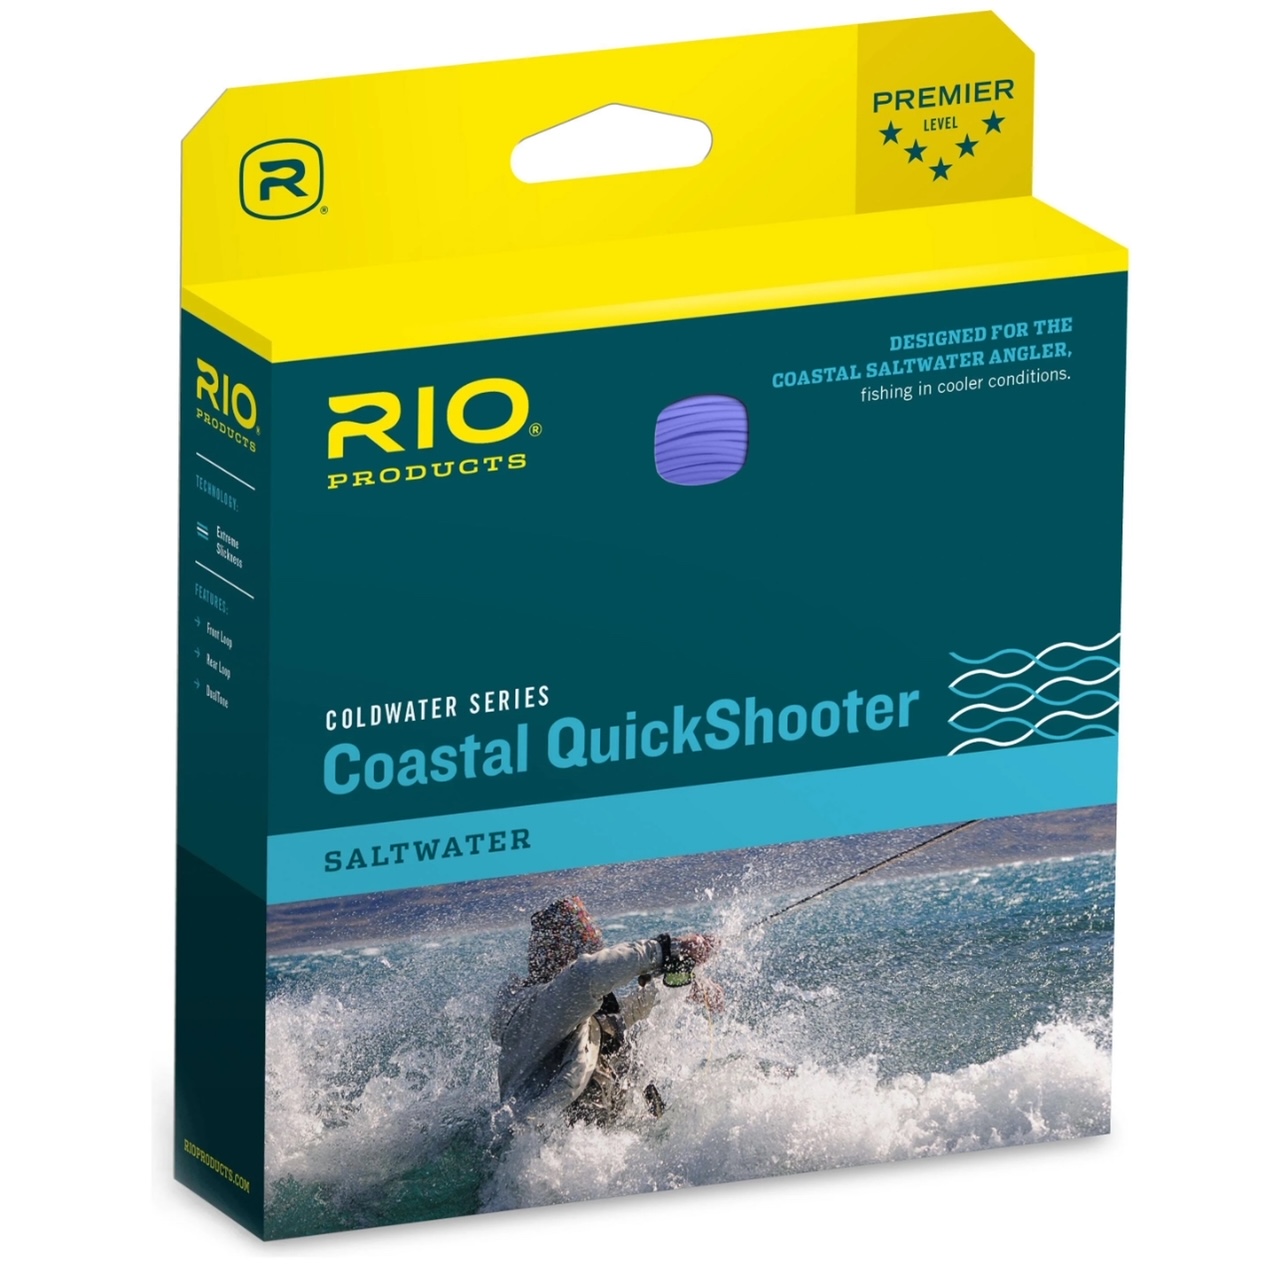 Premier Coastal Quickshooter